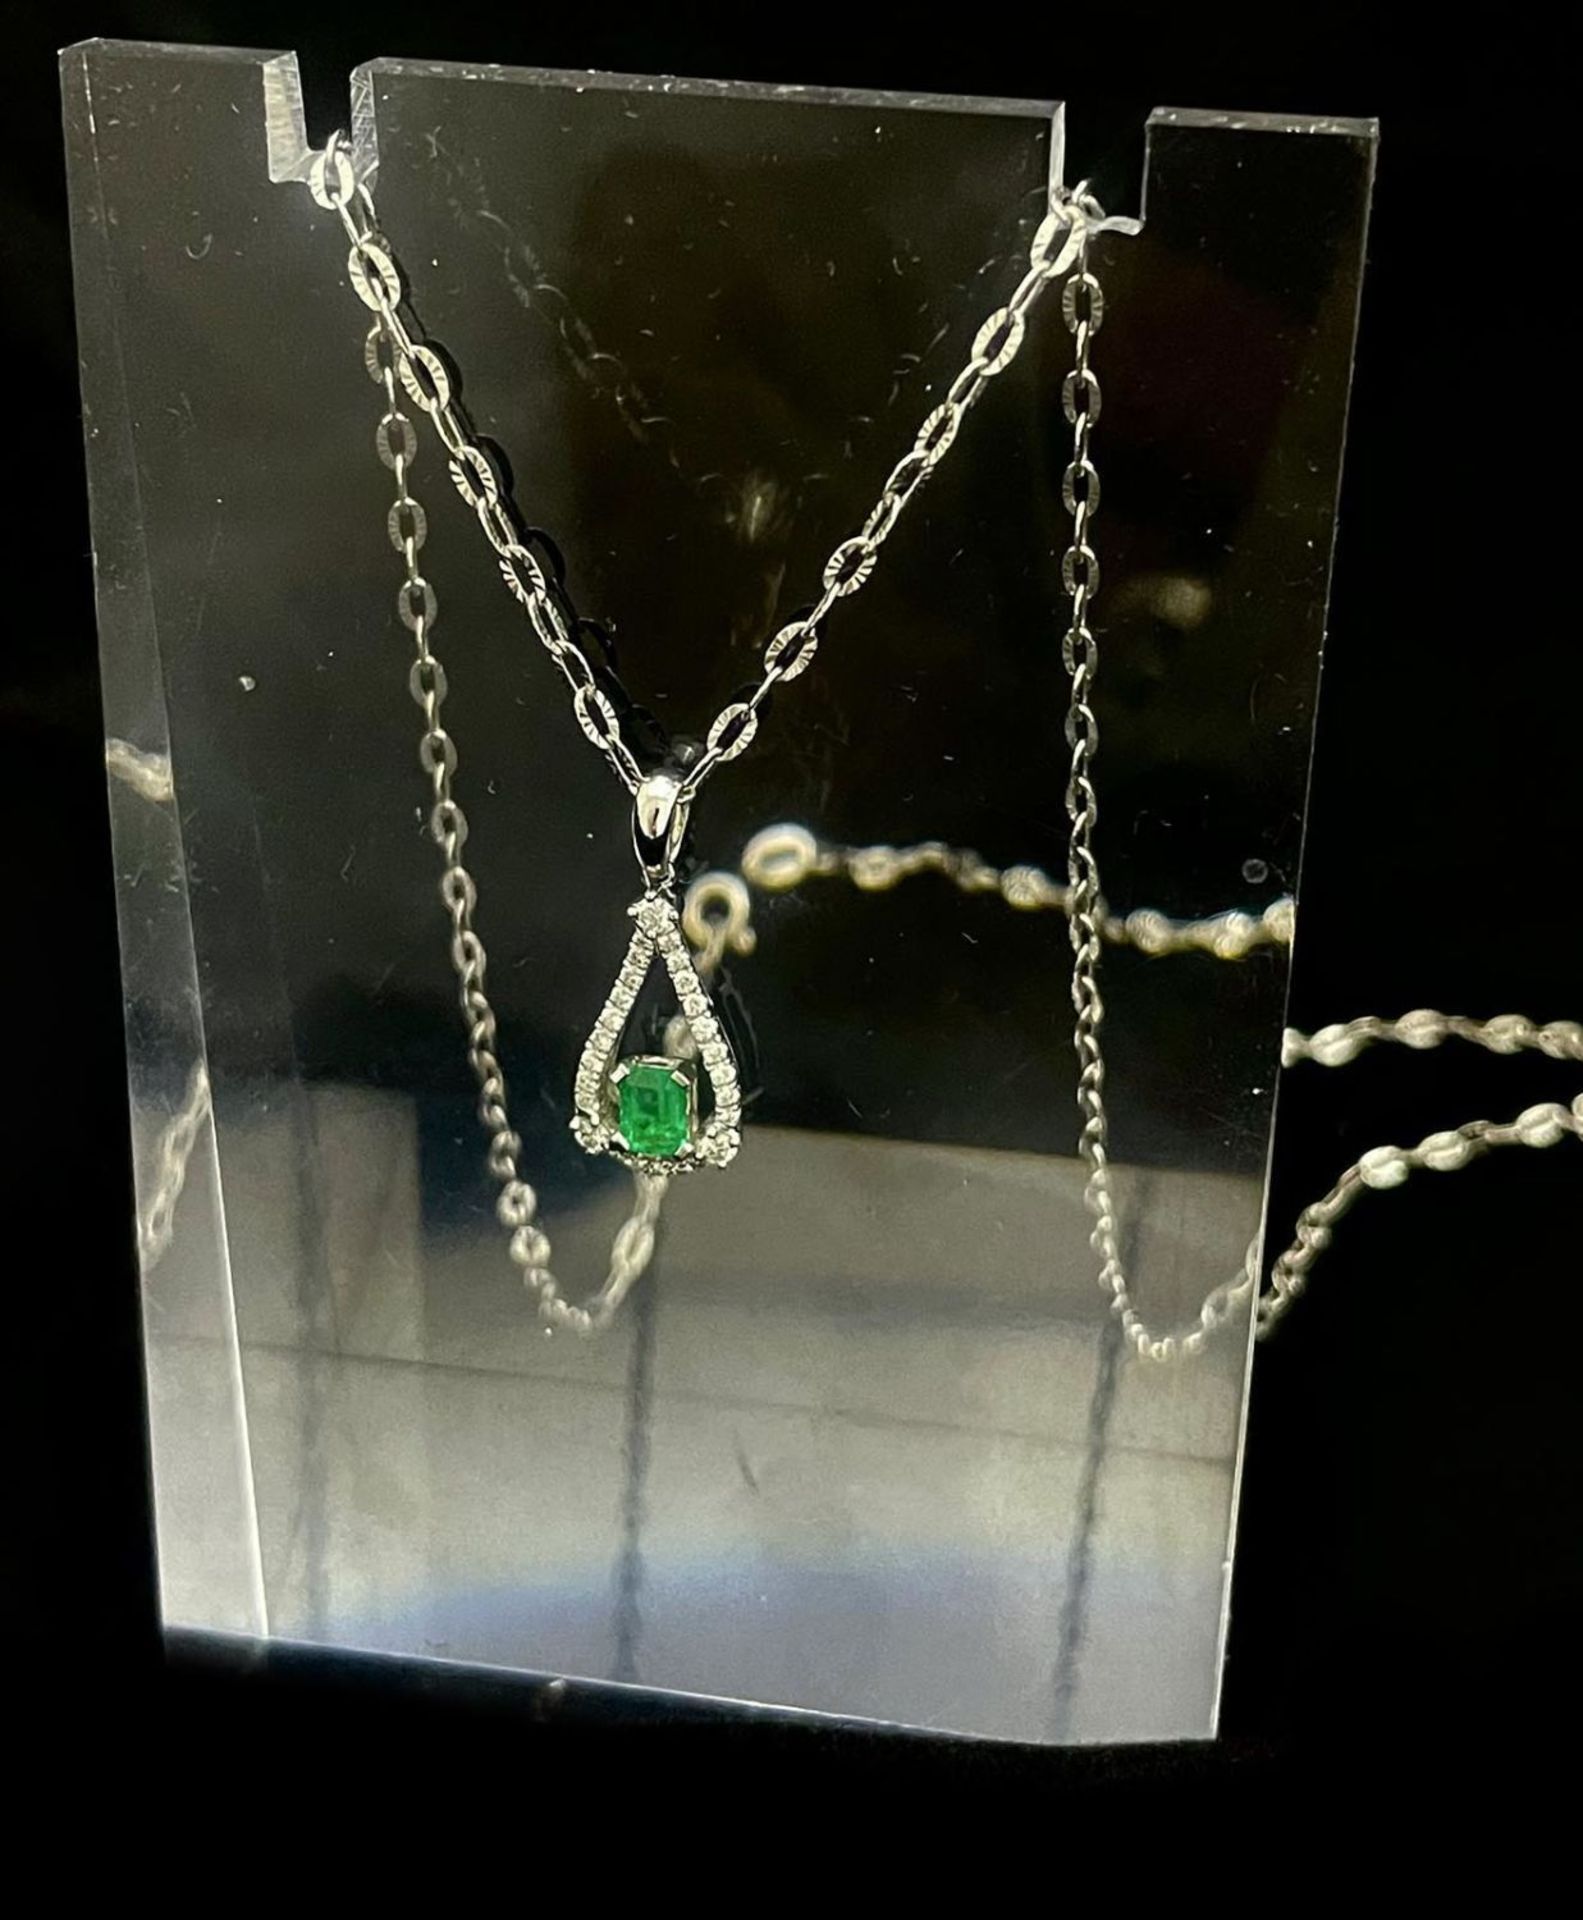 18kt white gold teardrop pendant, diamonds and emerald. - Image 3 of 5